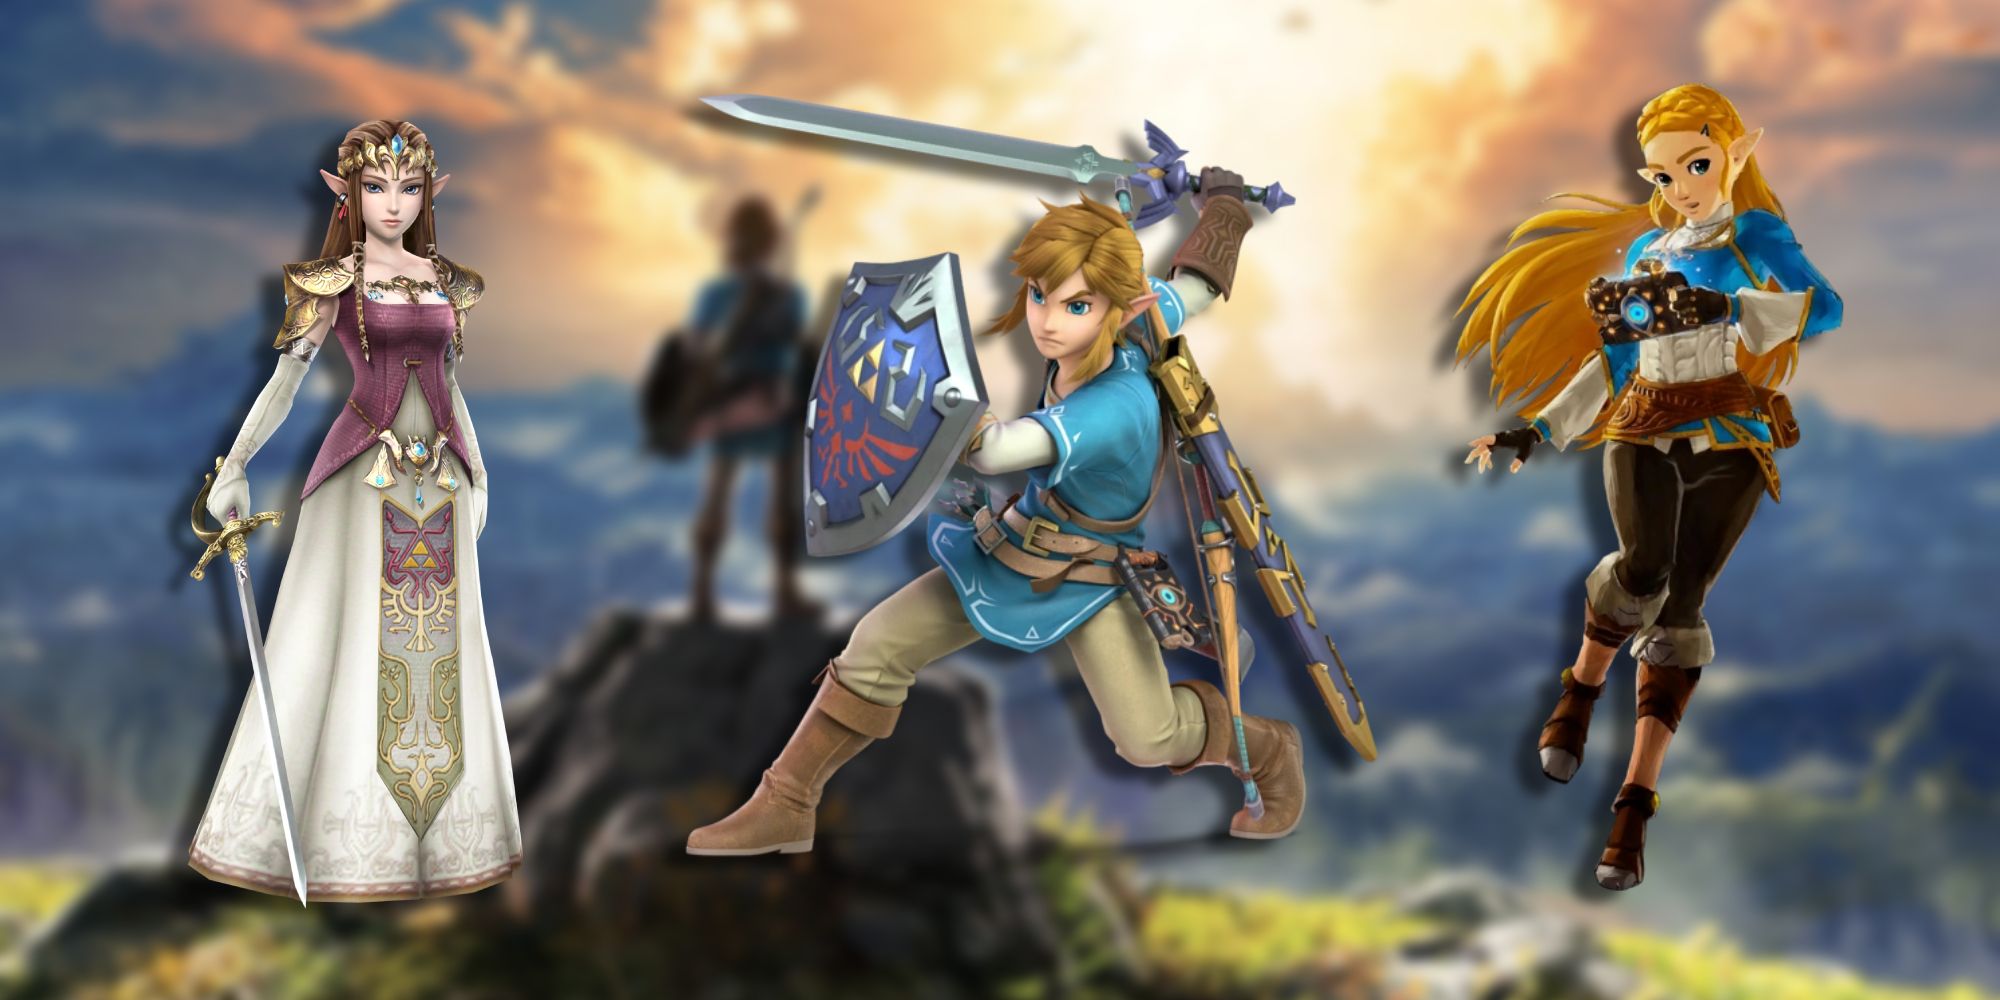 The Legend of Zelda Link Prestige Child Costume, Small (4-6)